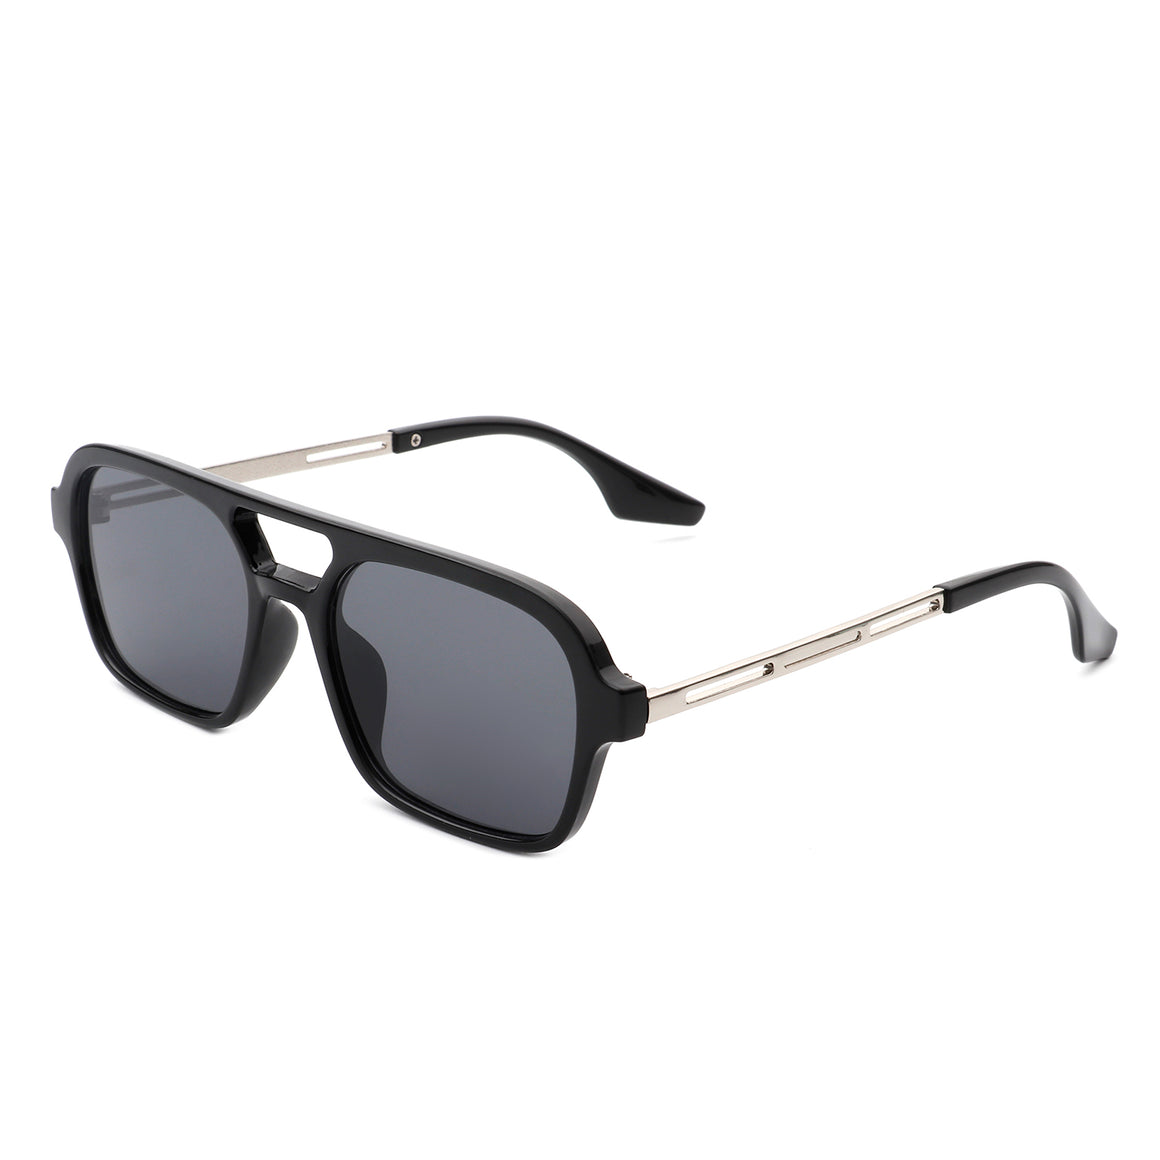 Candorae - Retro Square Brow-Bar Fashion Aviator Style Vintage Sunglasses